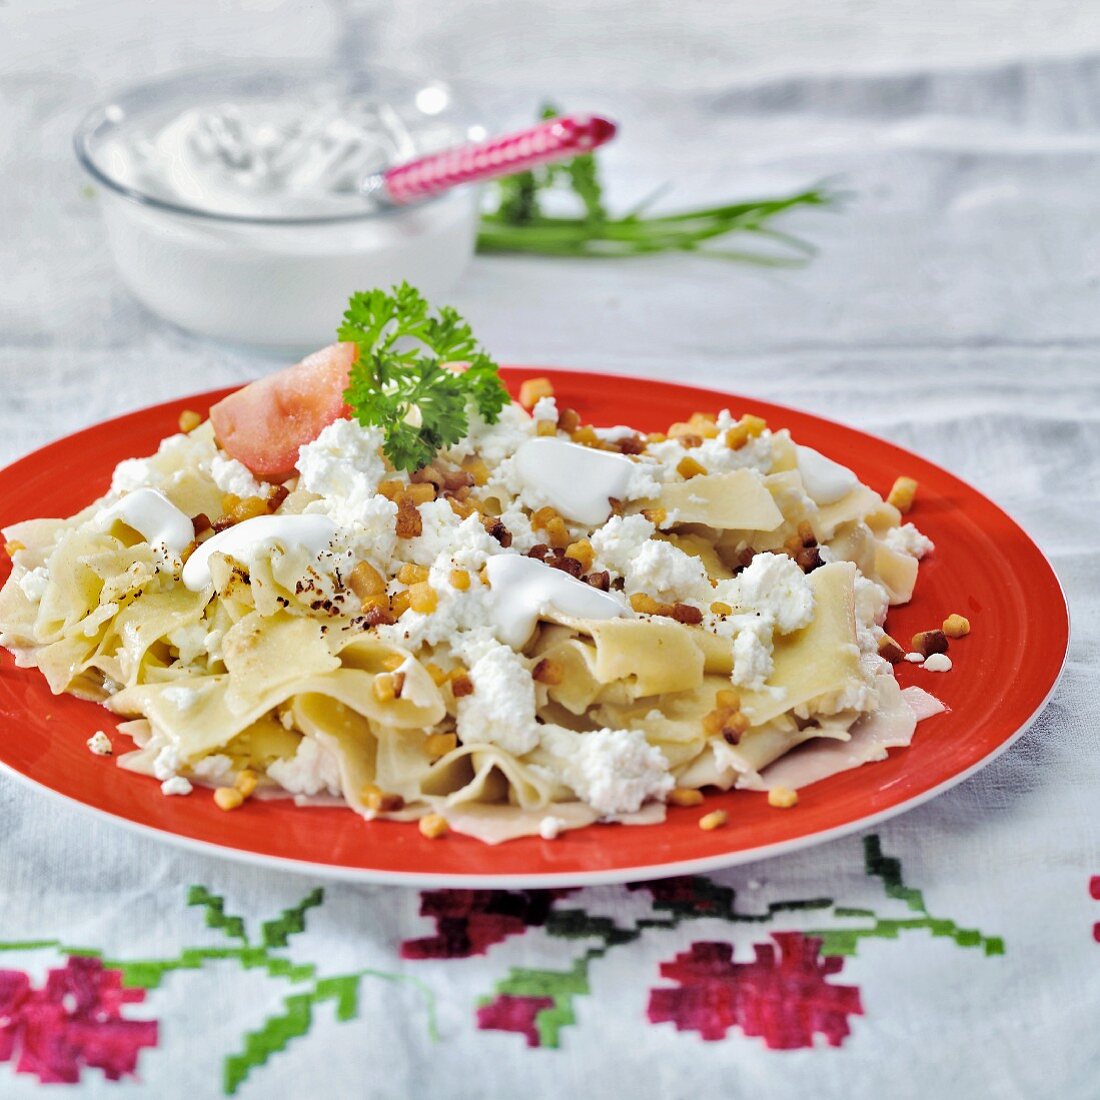 Túróscsusza (pasta with quark, sour cream and bacon, Hungary)